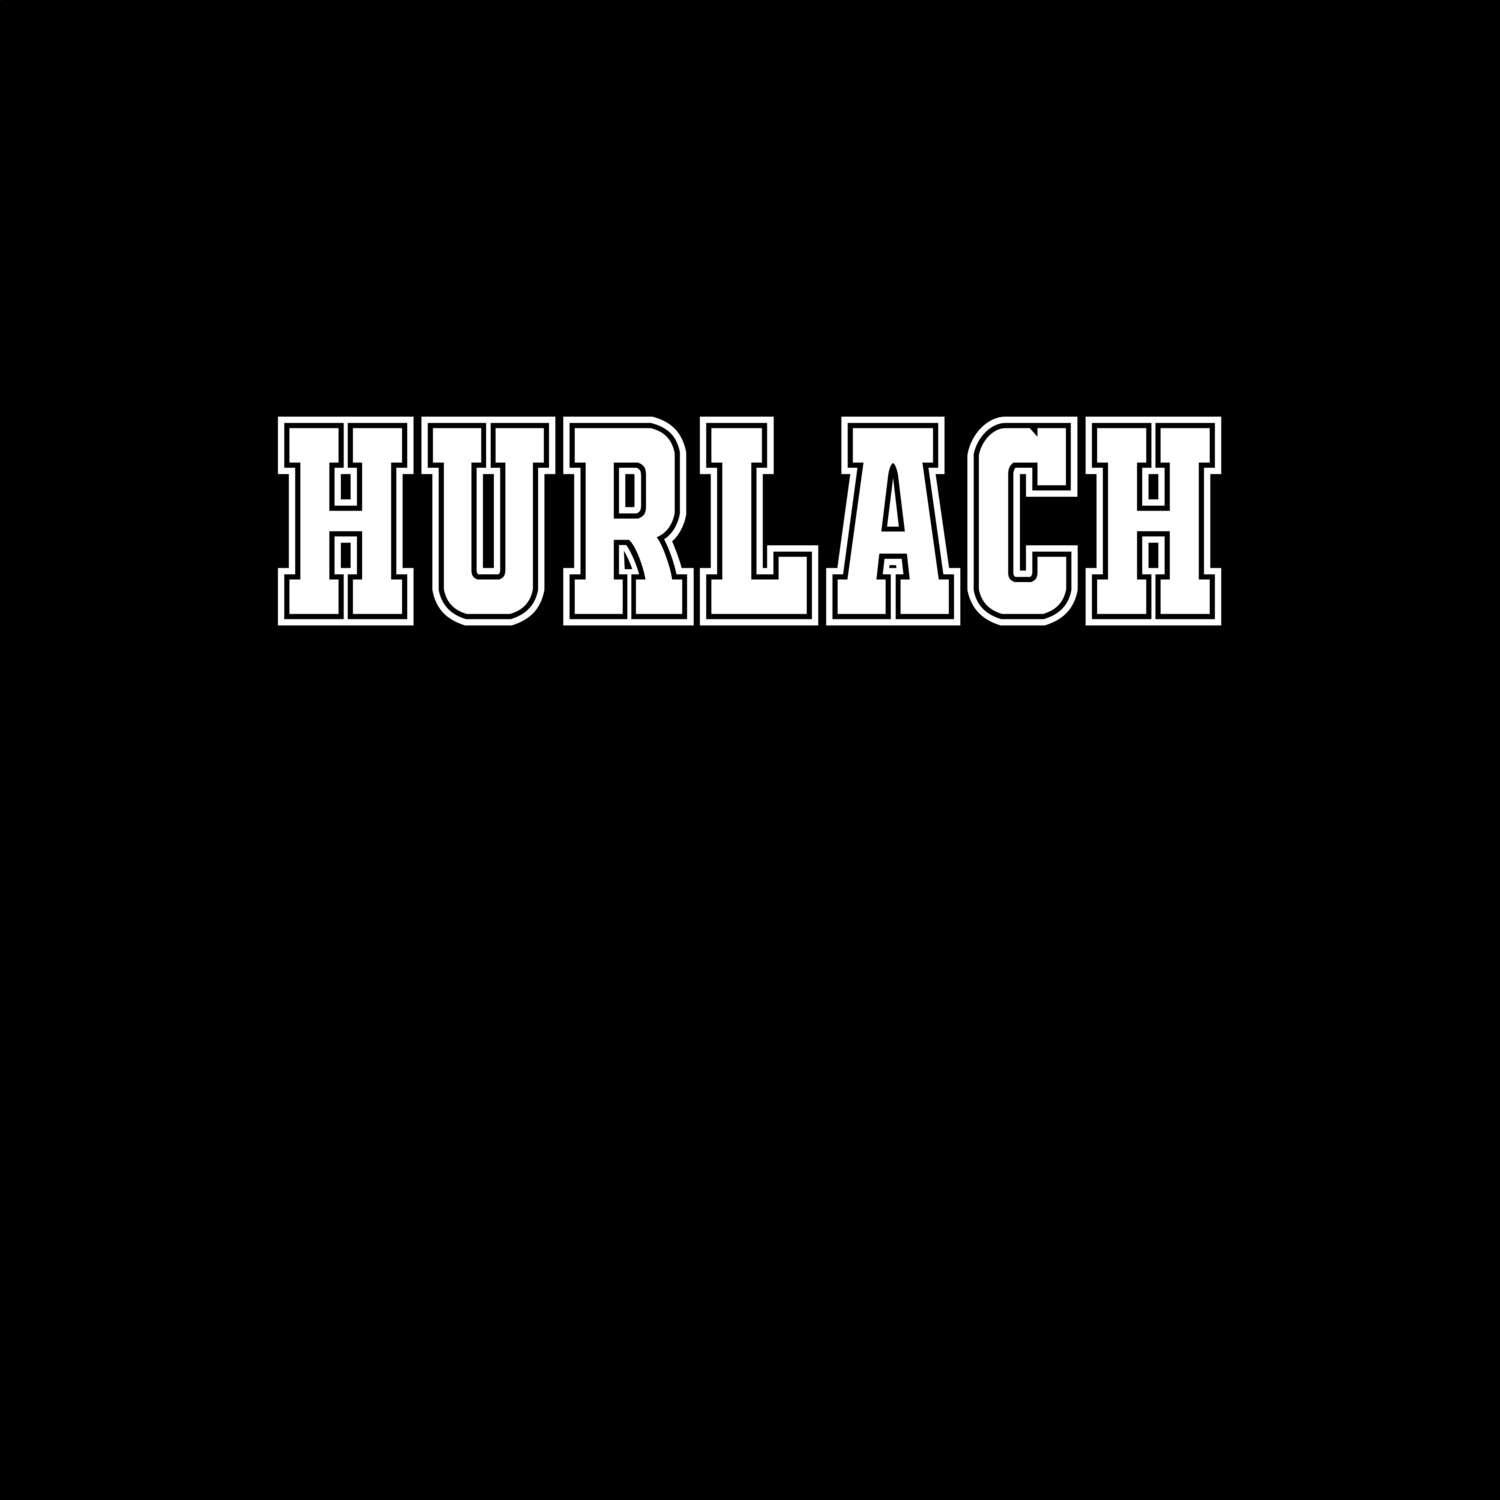 Hurlach T-Shirt »Classic«